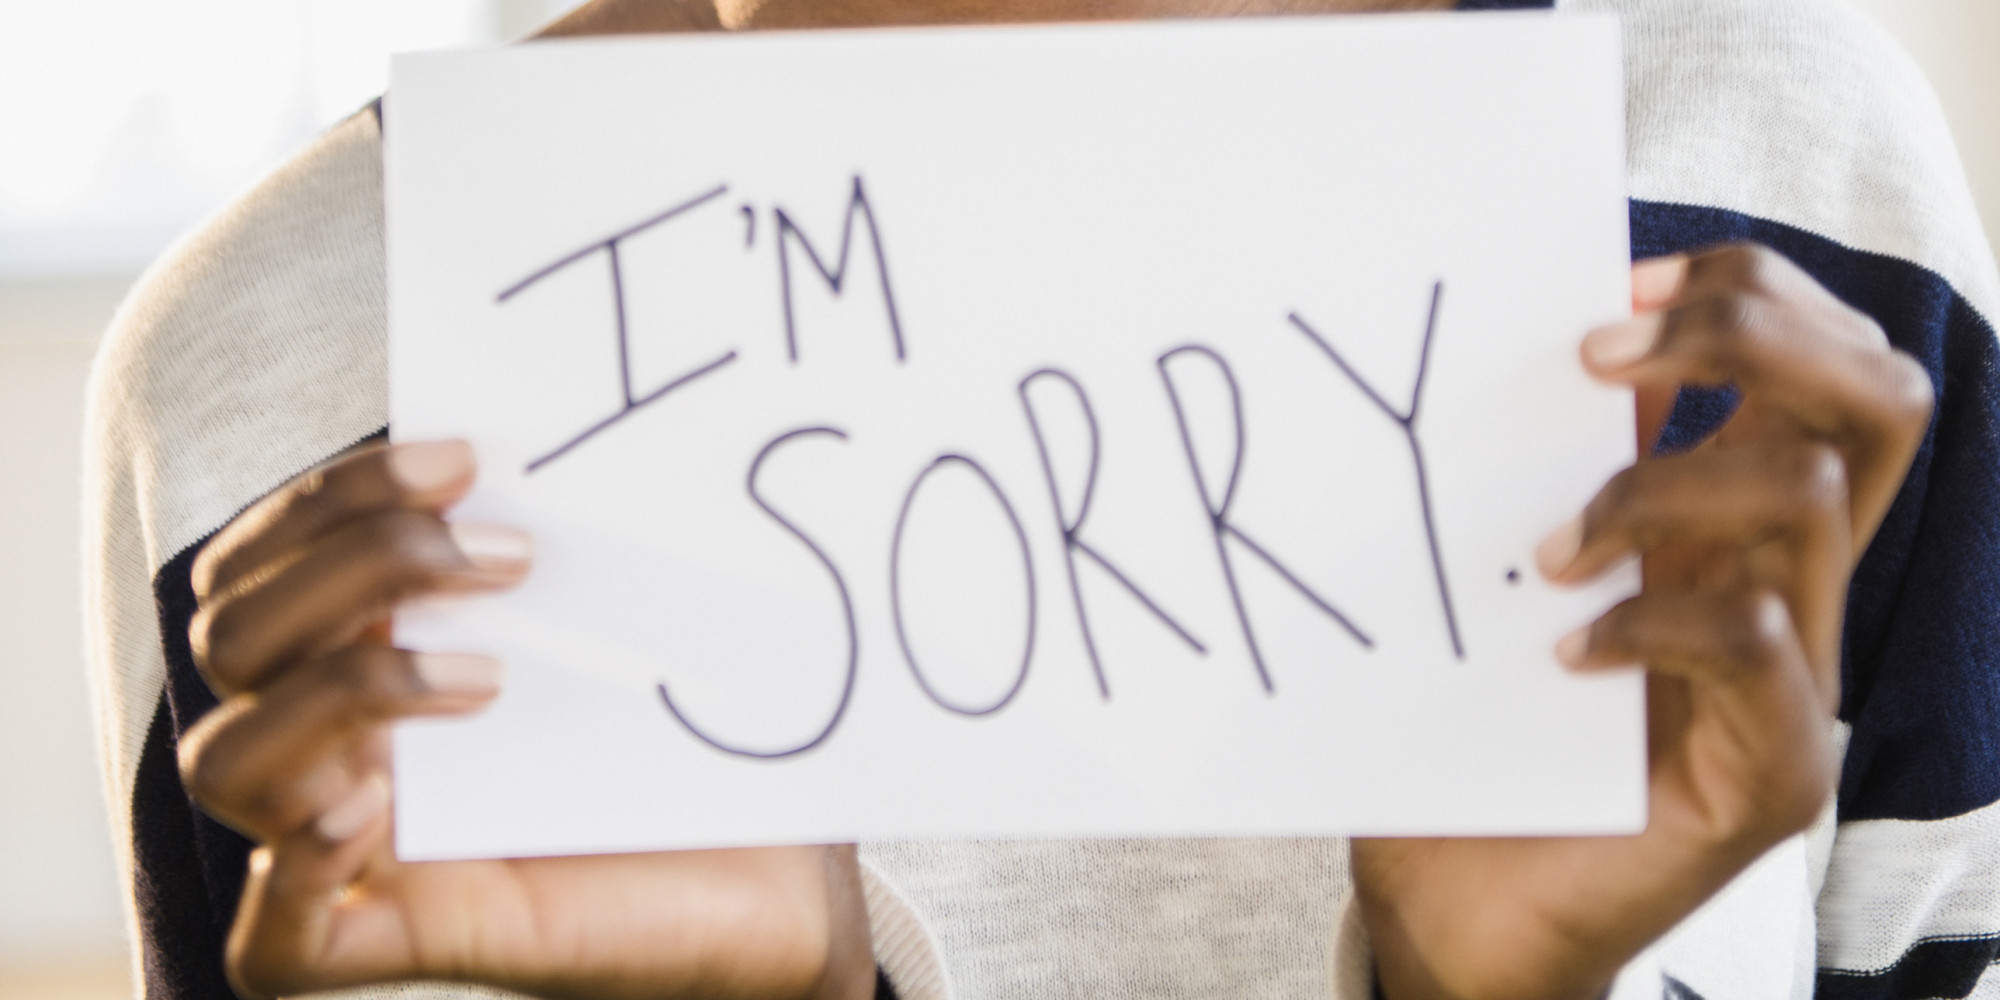 Wrong message. Make an apology. No apology. Say sorry. Man saying sorry.